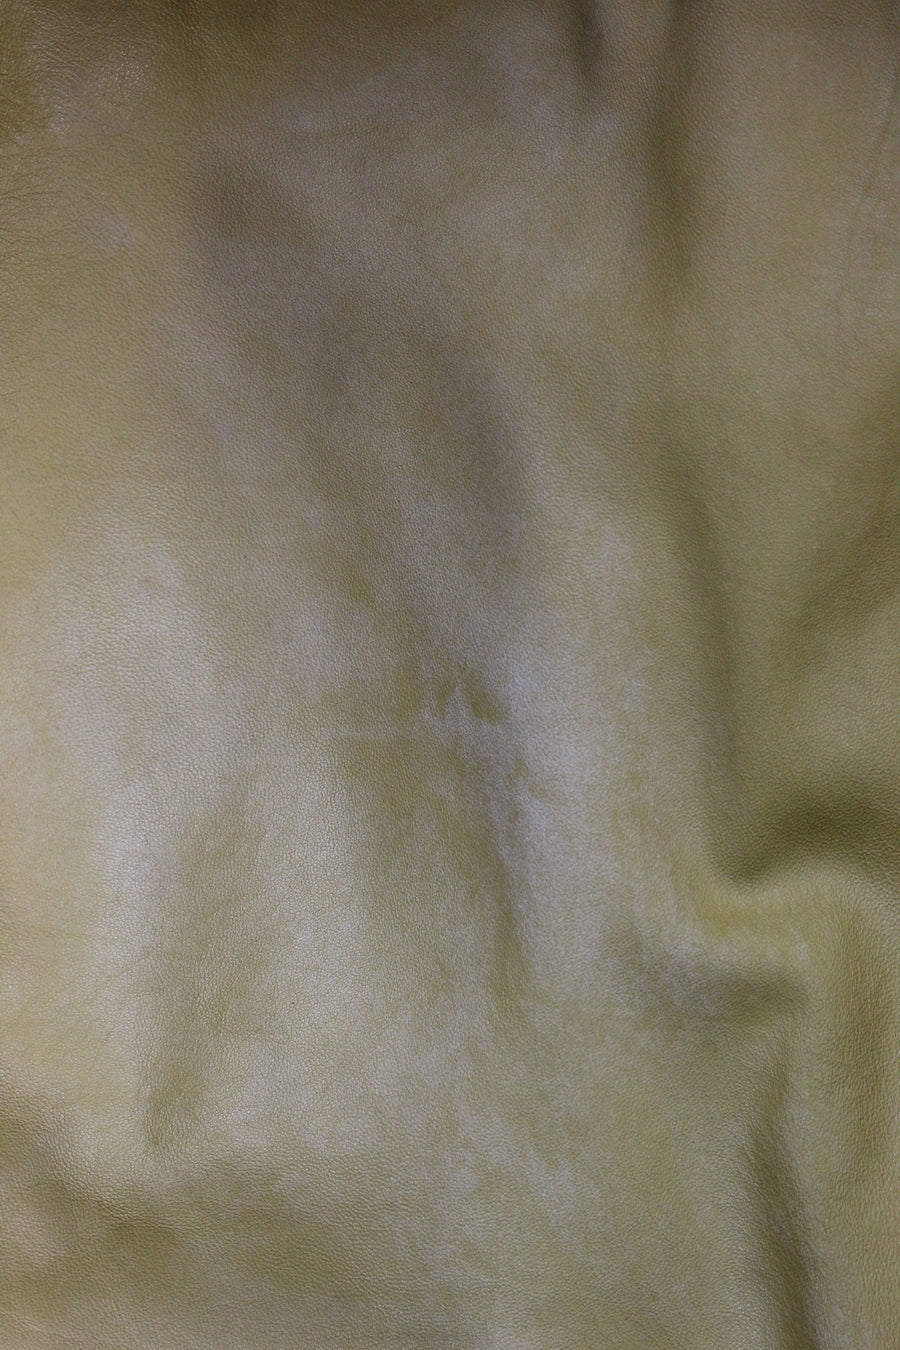 1960s BONNIE CASHIN Deep Freeze leather fur coat medium large | new fall